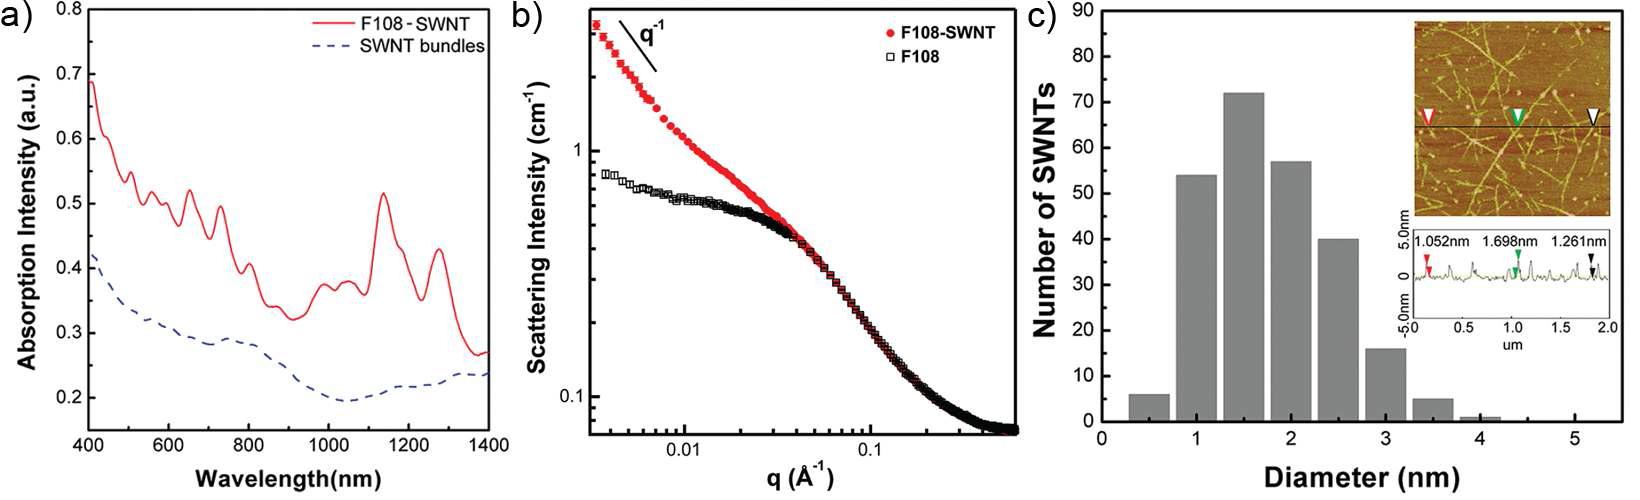 F108-SWNT 입자의 precharacterization result. a) UV-vis-NIR spectra b) SANS c) AFM